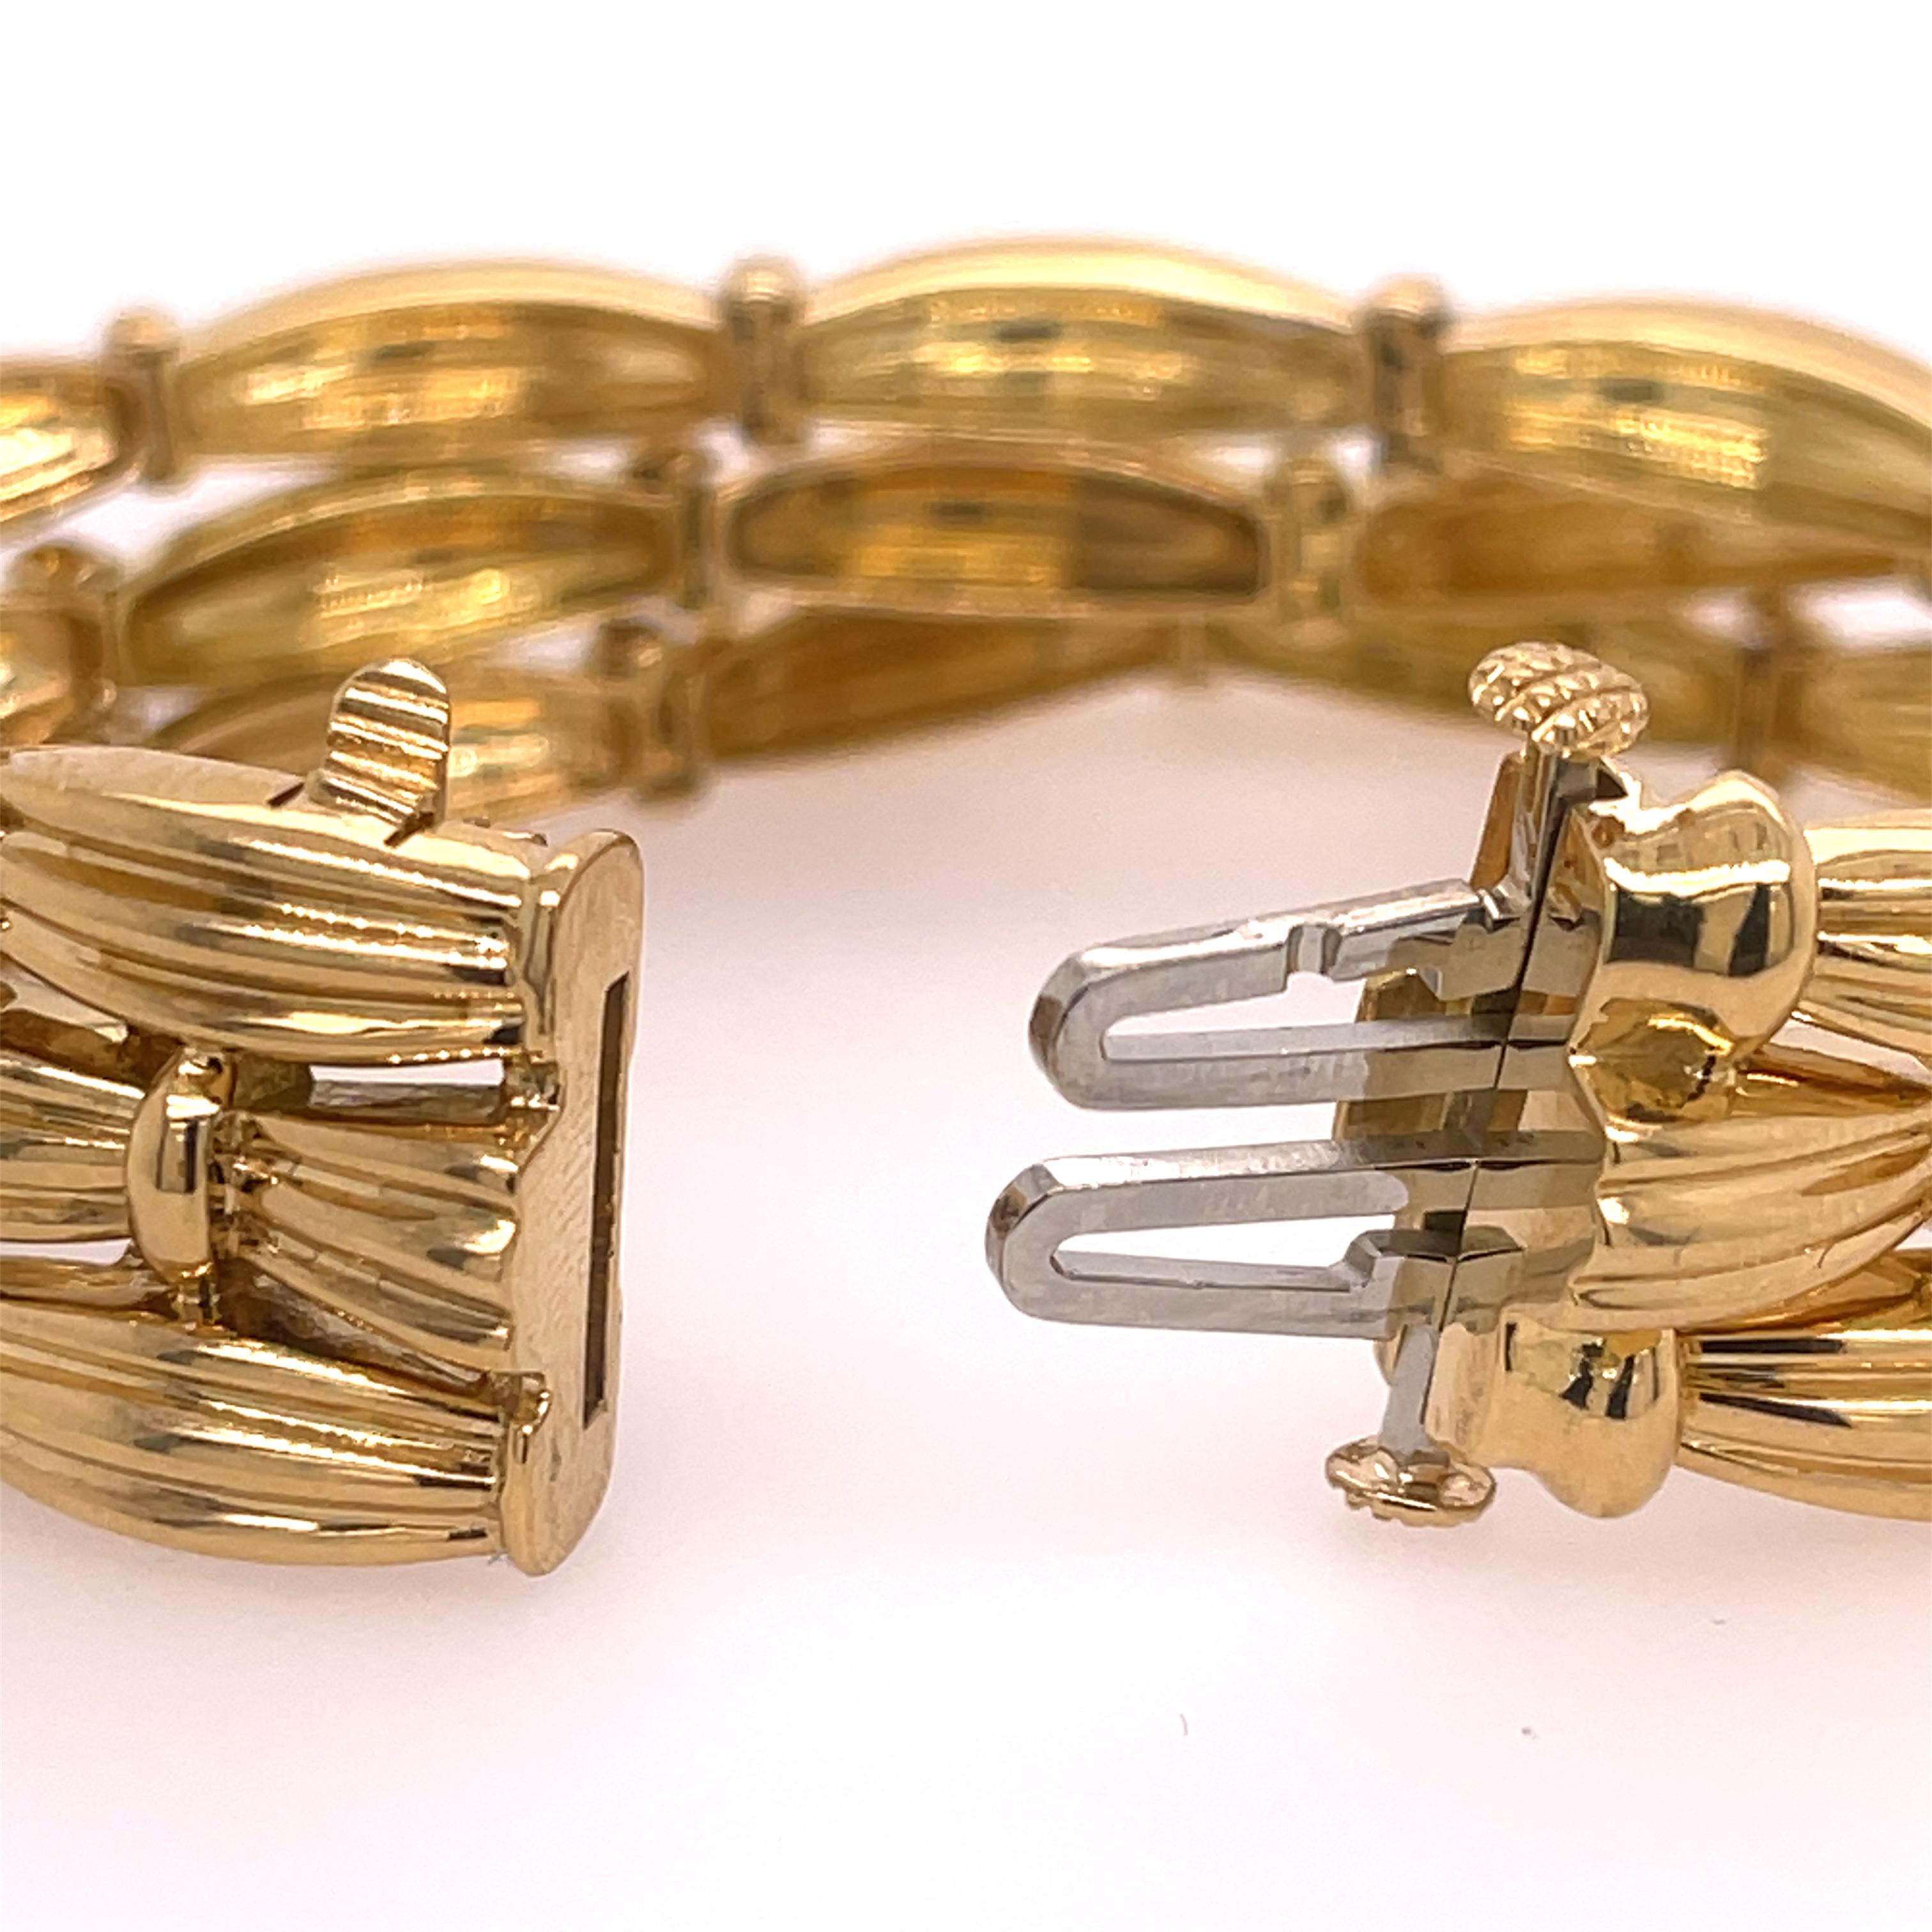 Tiffany & Co. triple row bracelet in 18k yellow gold. Stamped 1992 TIFFANY & CO 750.